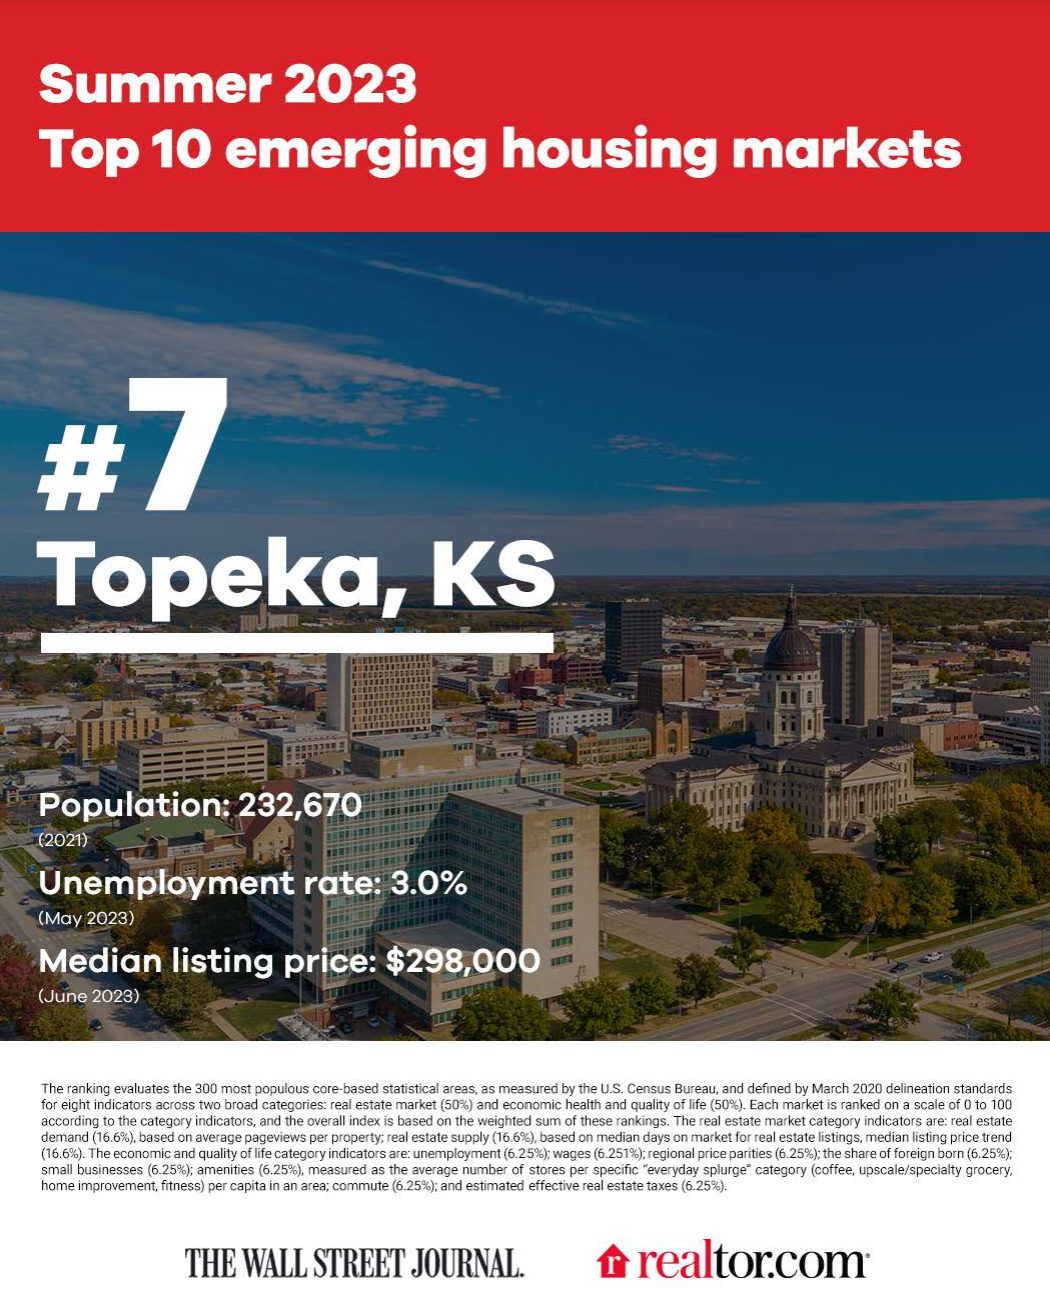 Wall Street Journal Names Topeka Emerging Housing Market for Summer 2023